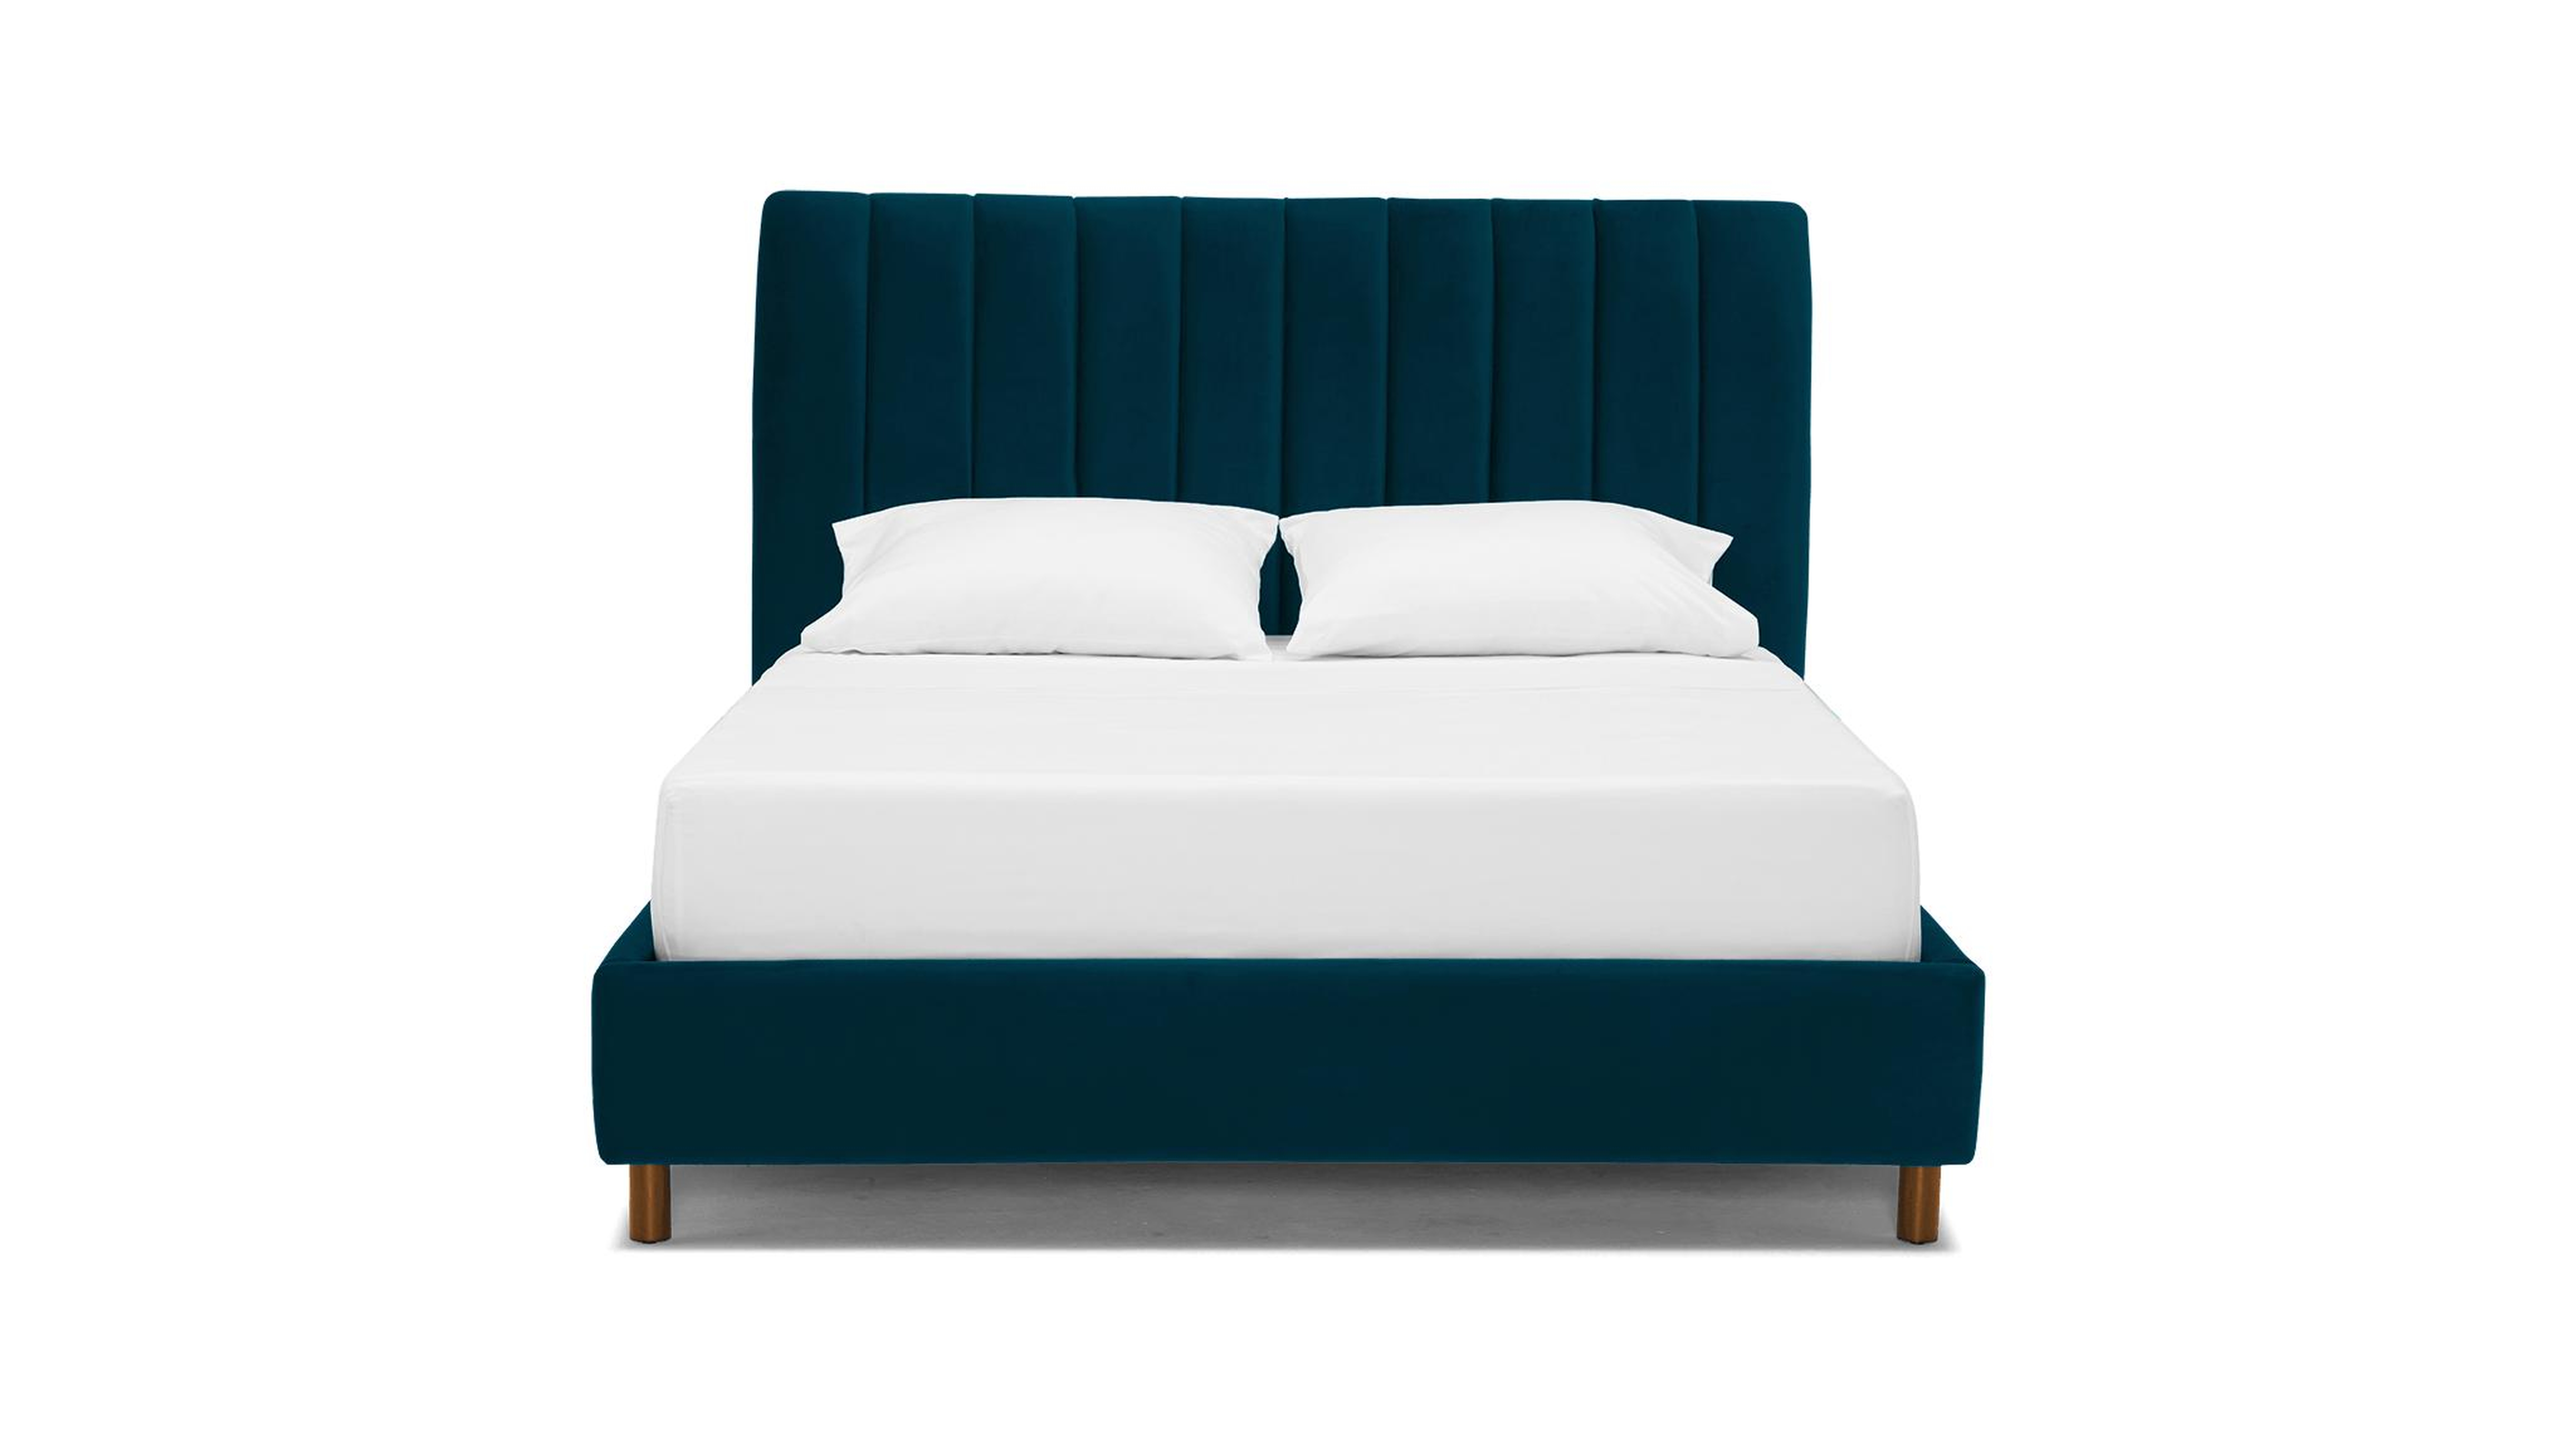 Blue Lotta Mid Century Modern Bed - Key Largo Zenith Teal - Mocha - Queen - Joybird